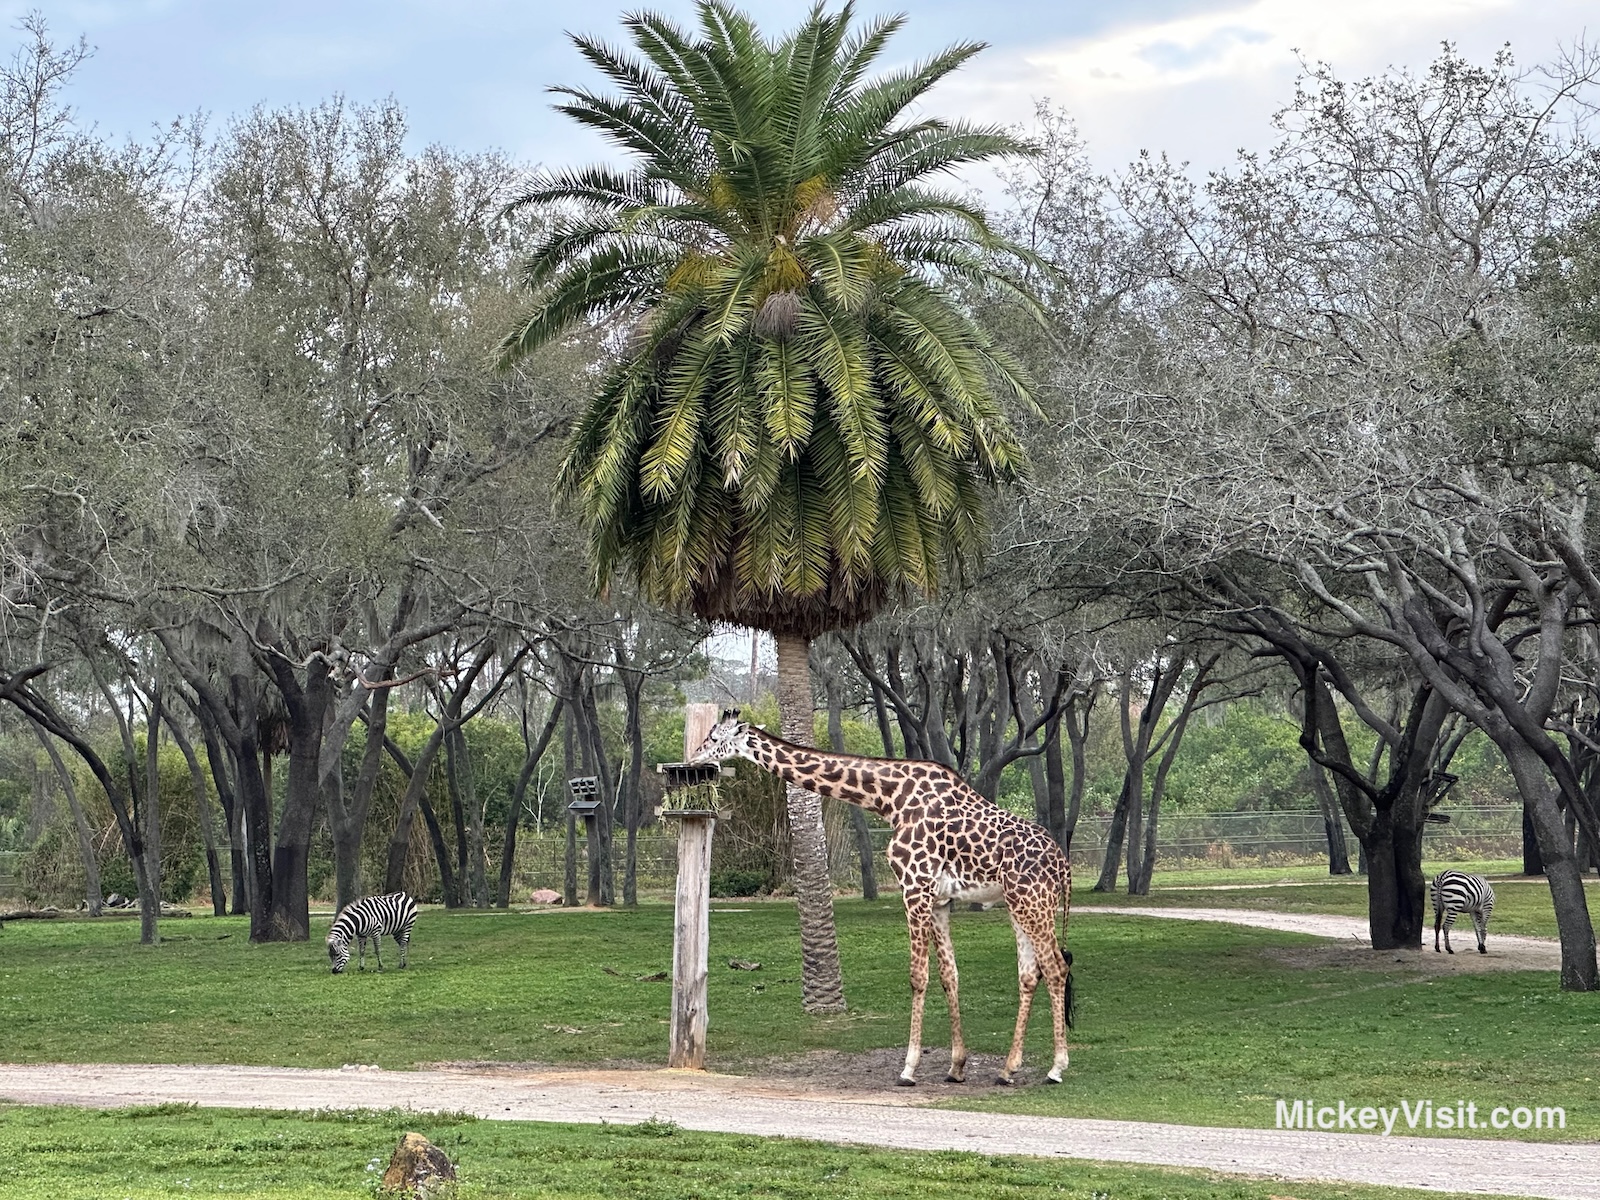 Giraffe and zebra at Animal Kingdom Lodge